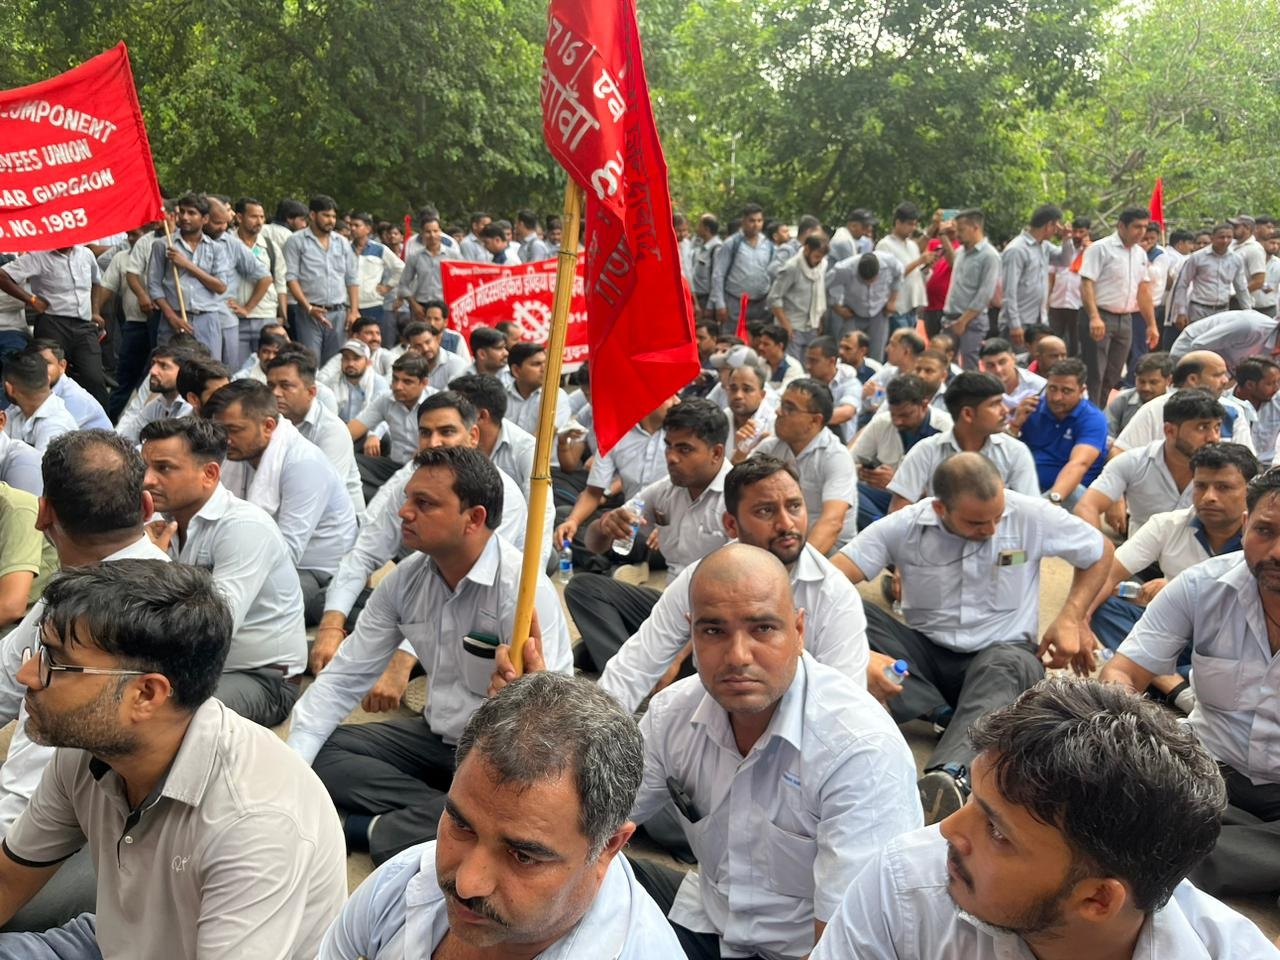 https://www.workersunity.com/wp-content/uploads/2023/07/Maruti-workers-11-years-of-struggle.jpg